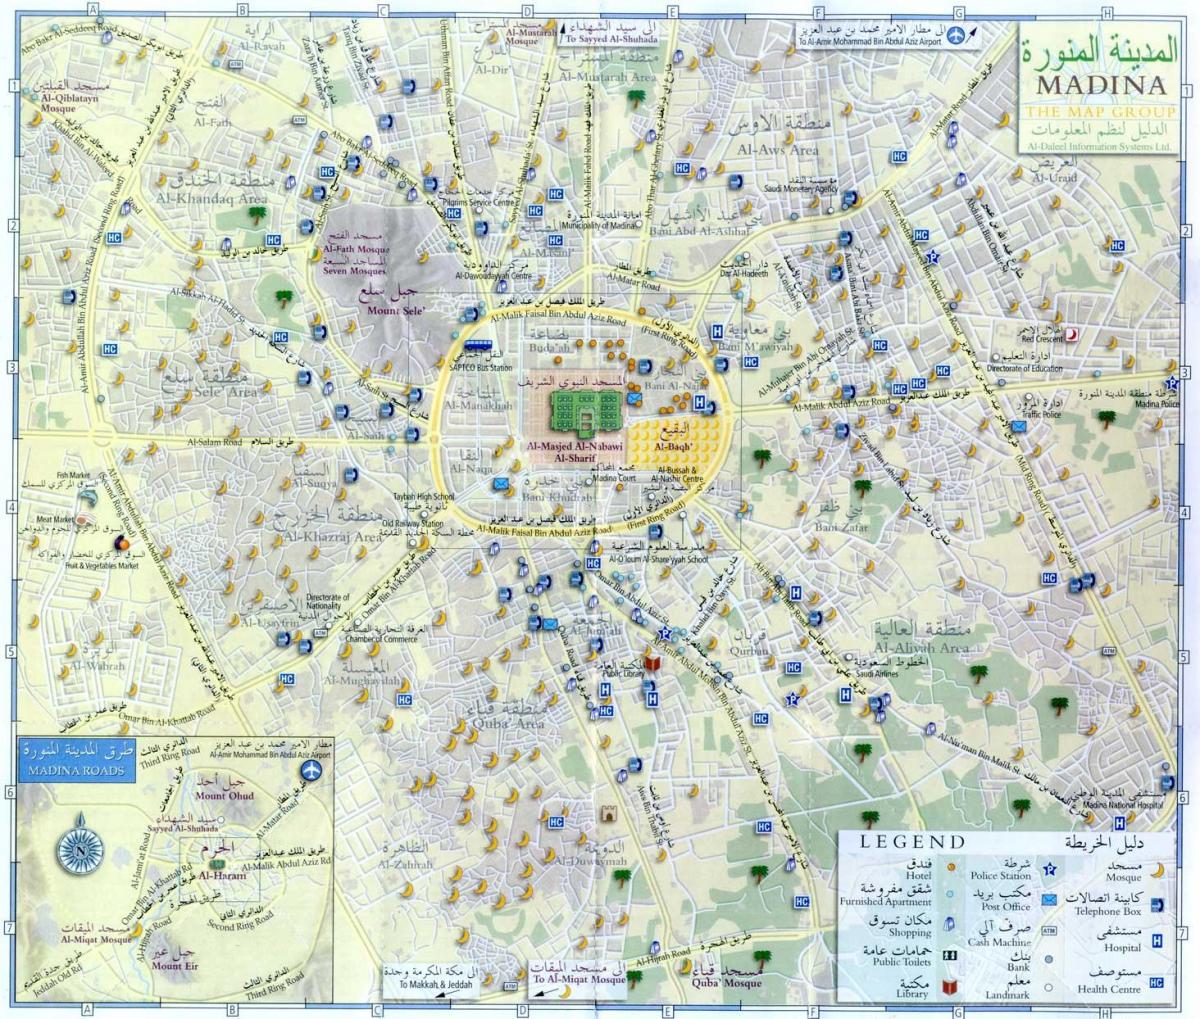 Mekka (Makkah) sightseeing kaart